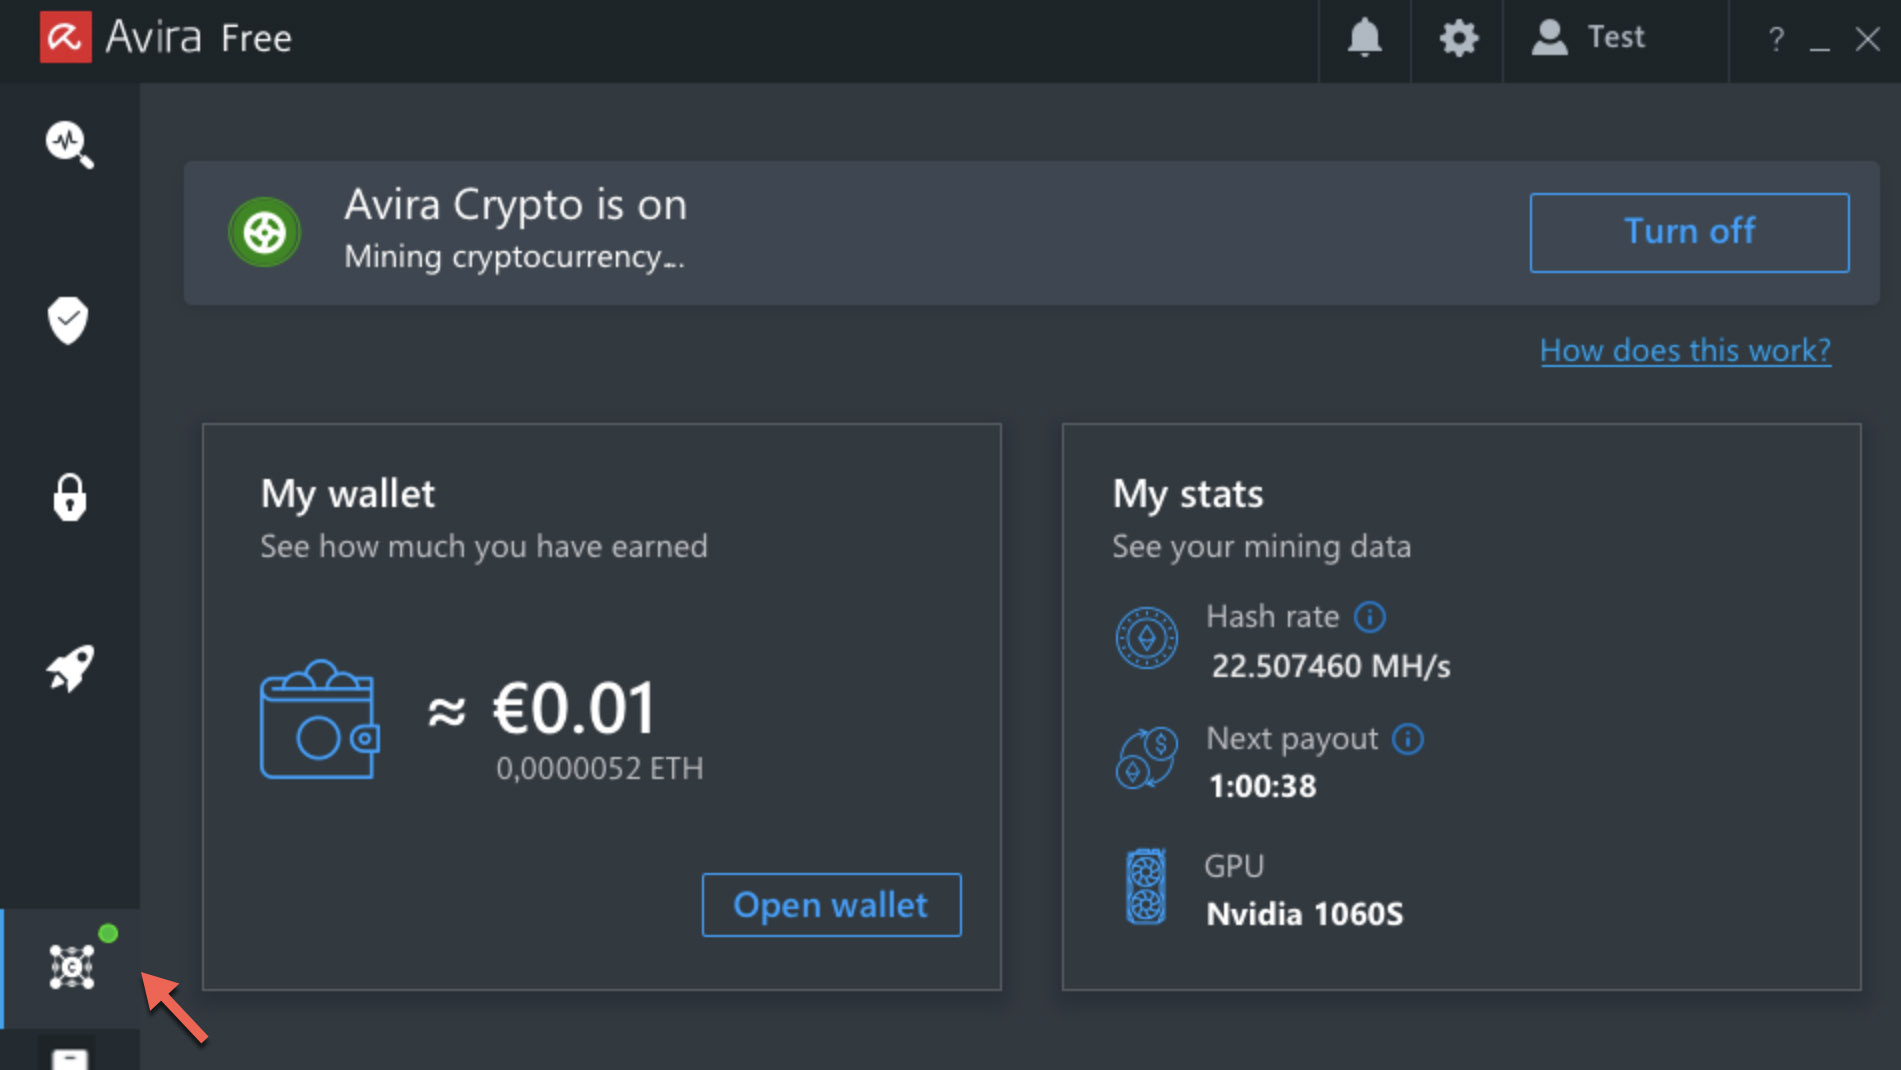 Screenshot of Avira's crypto mining app in operation